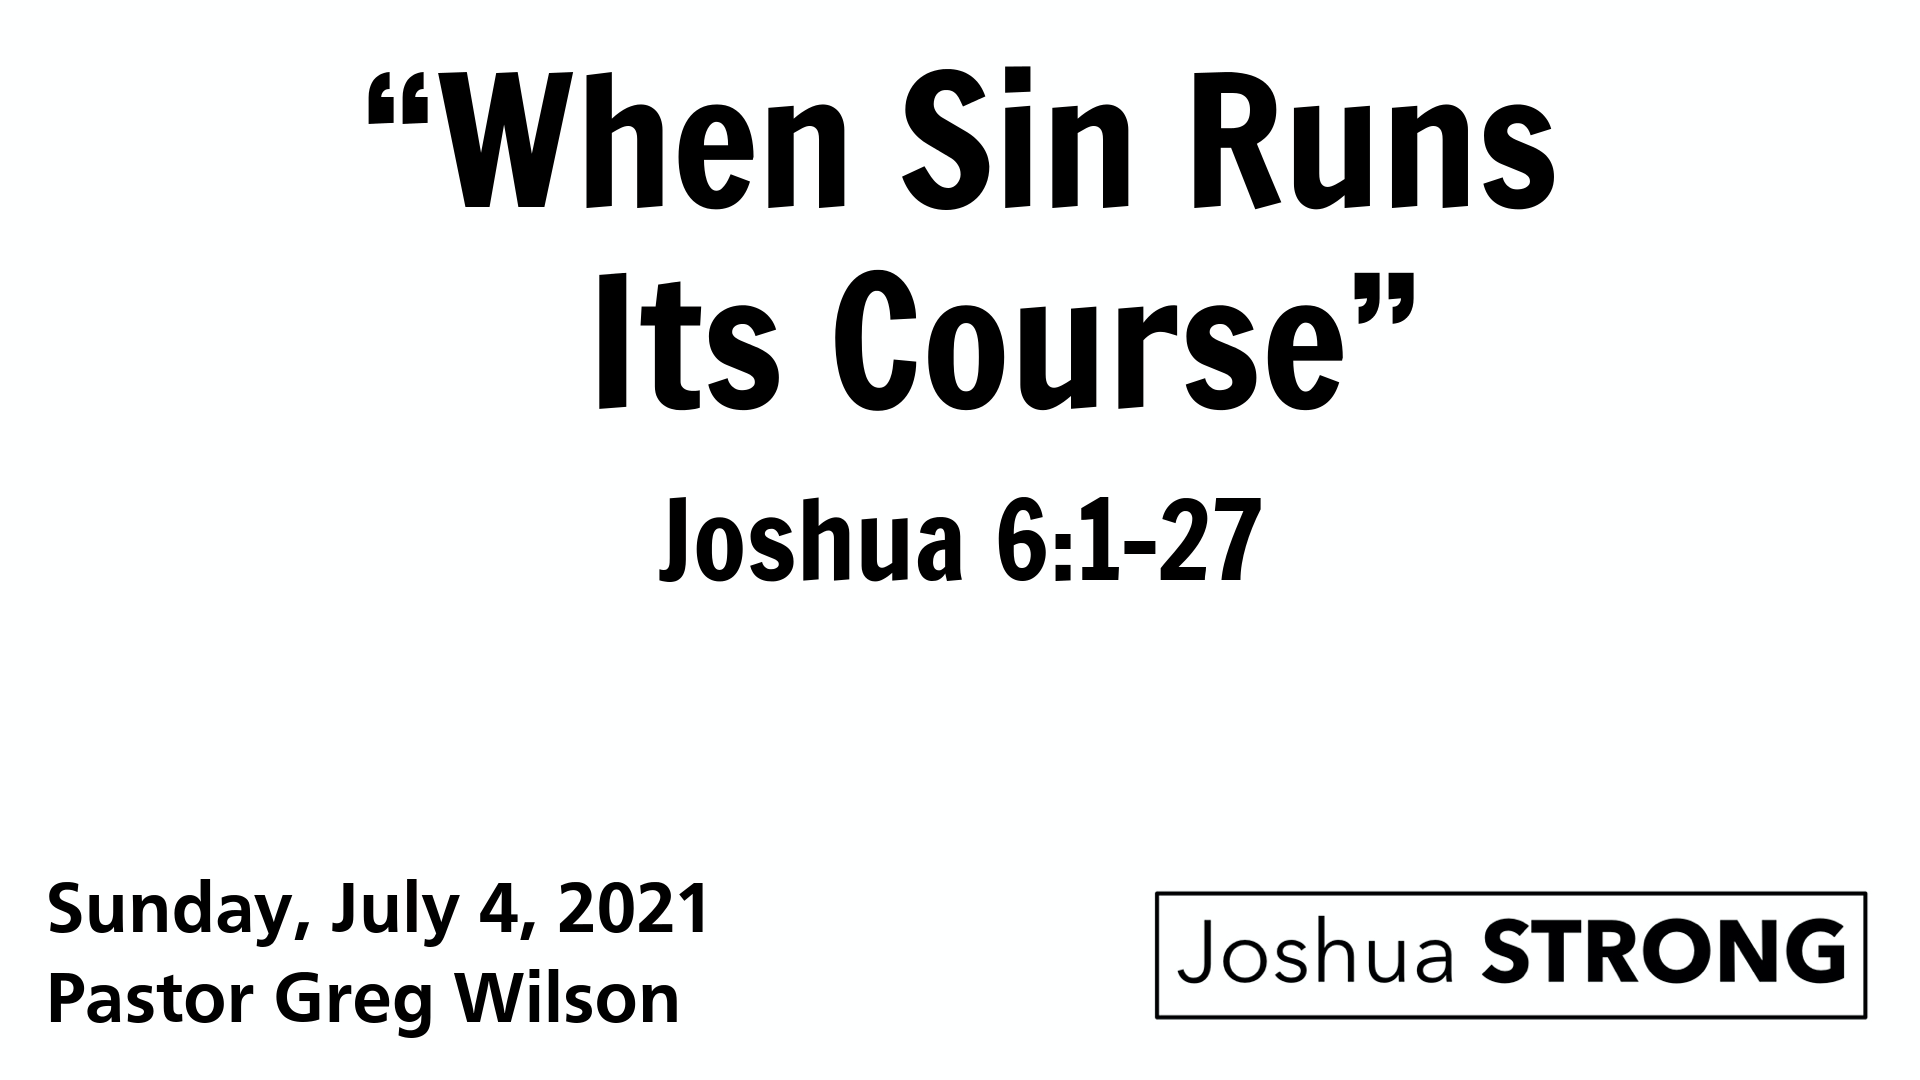 “When Sin Runs Its Course”